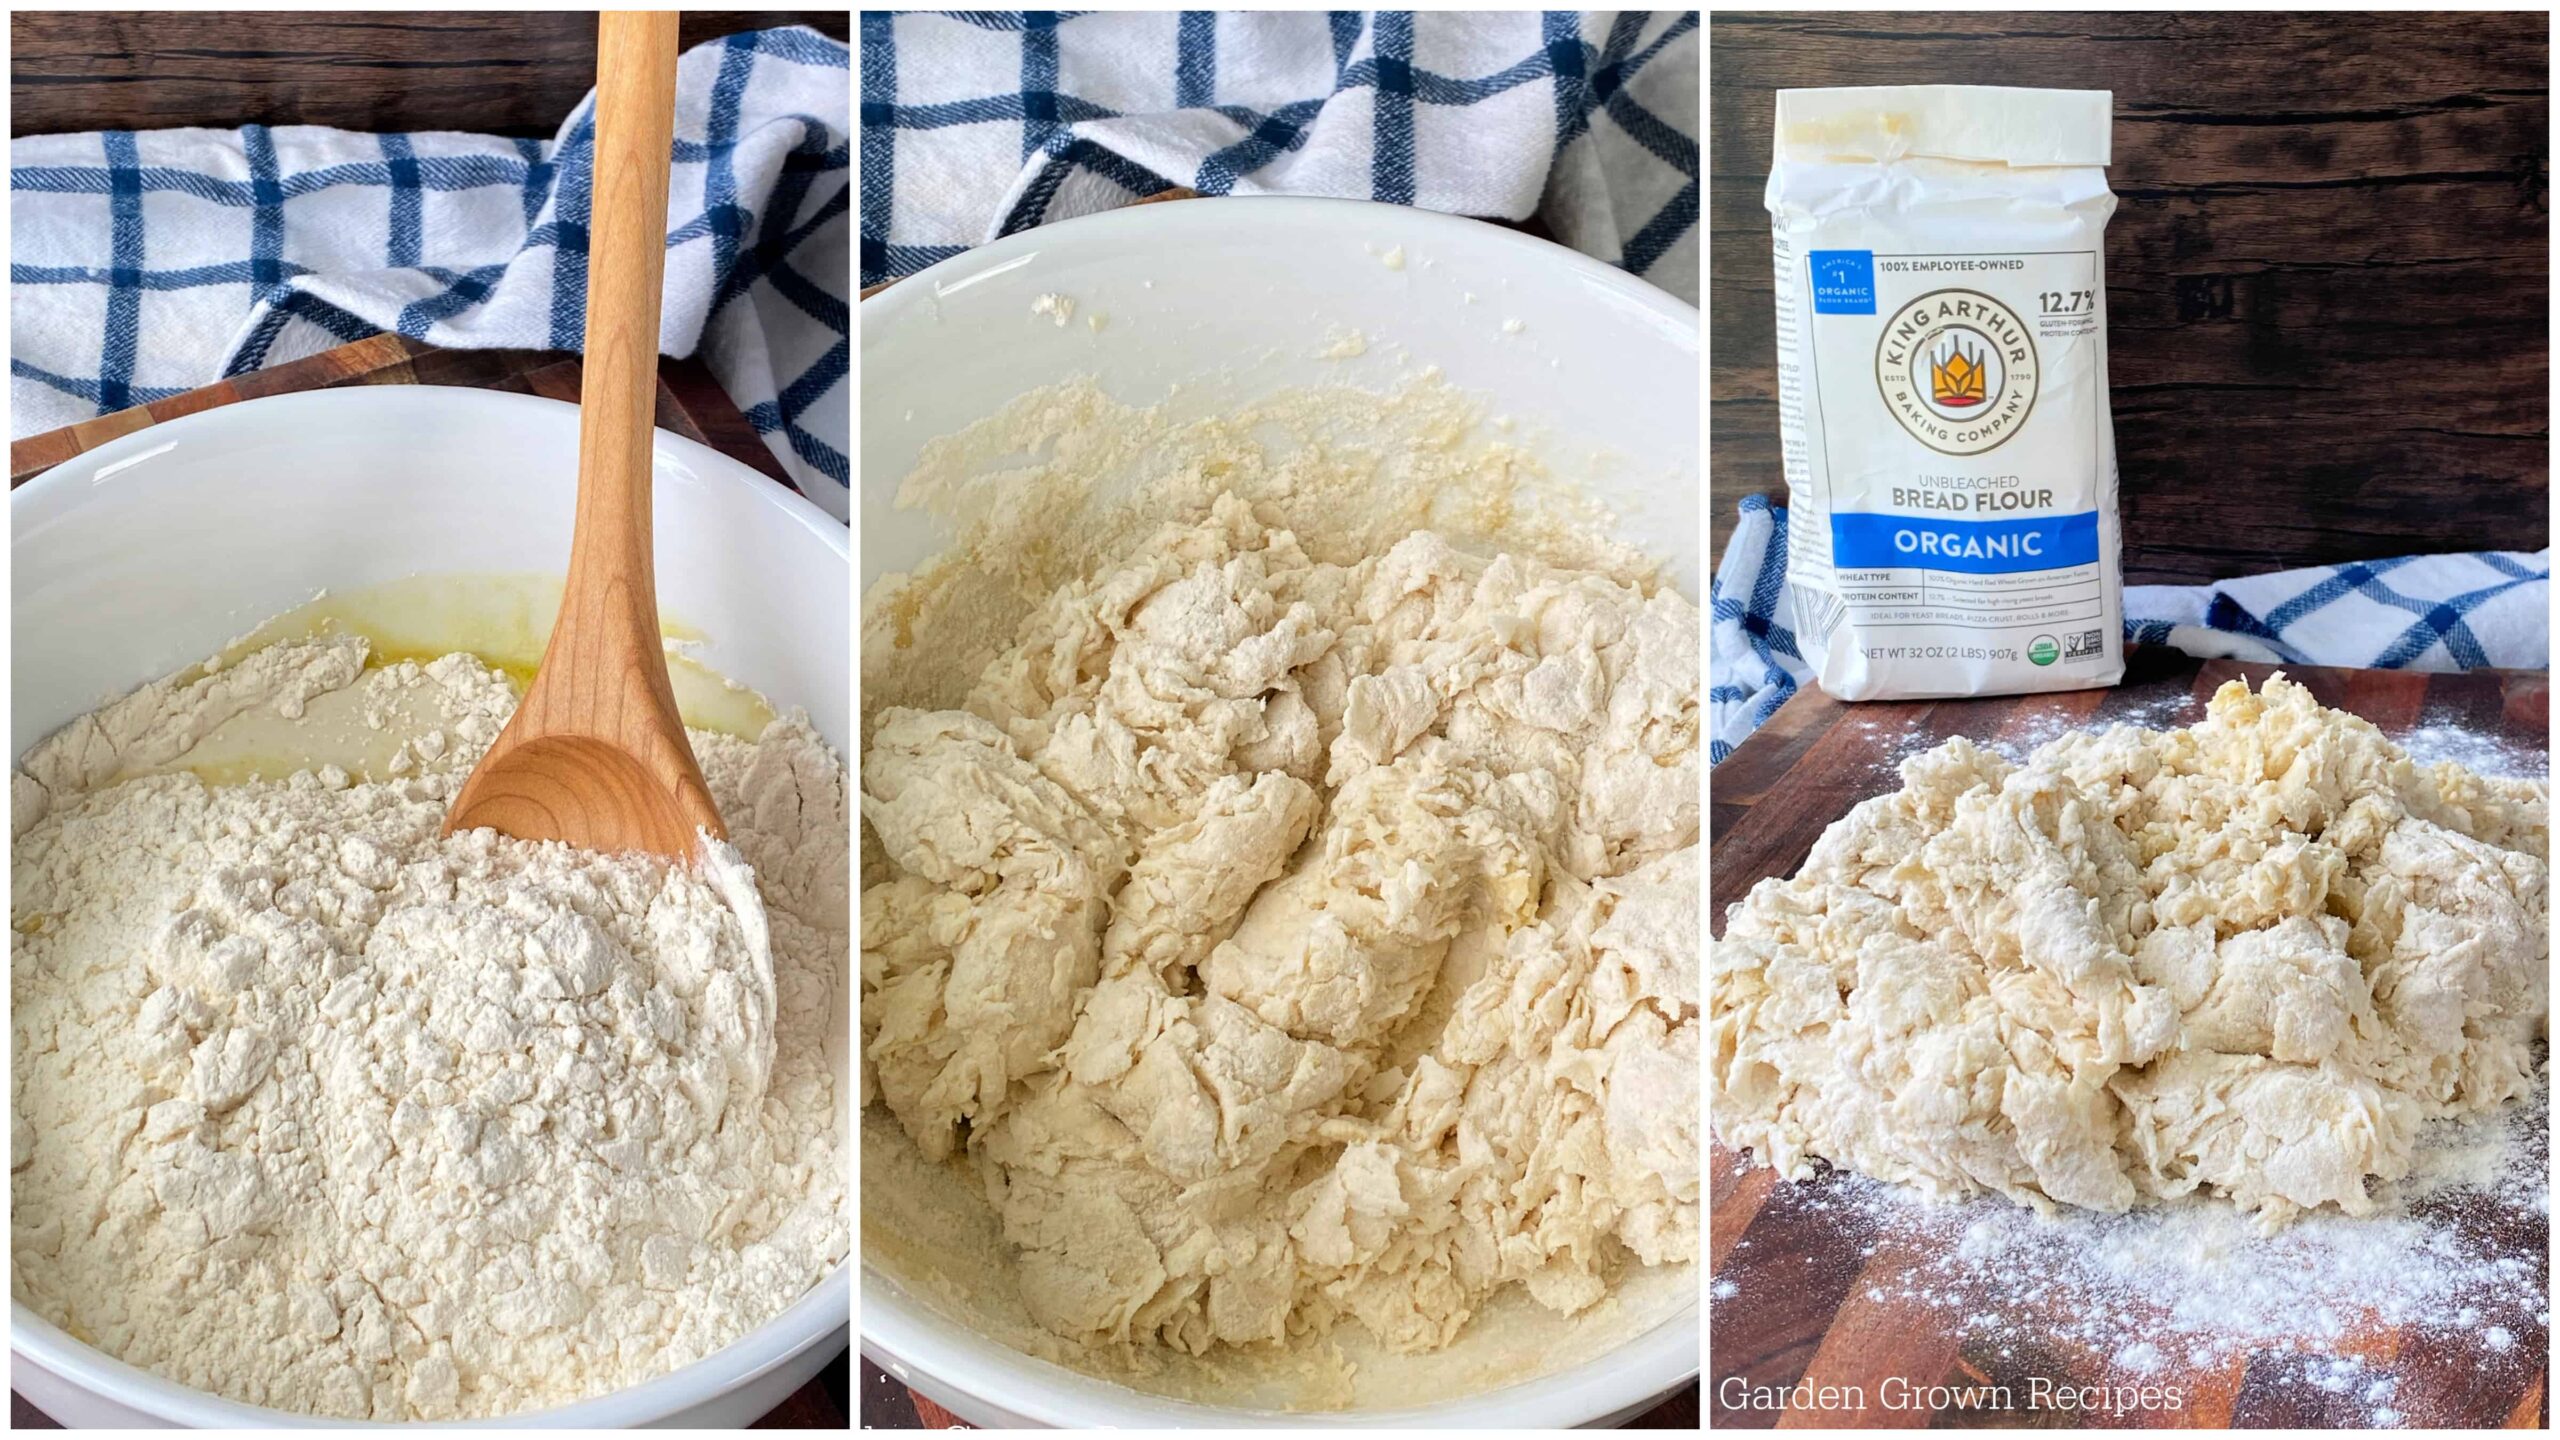 mix to form a shaggy dough